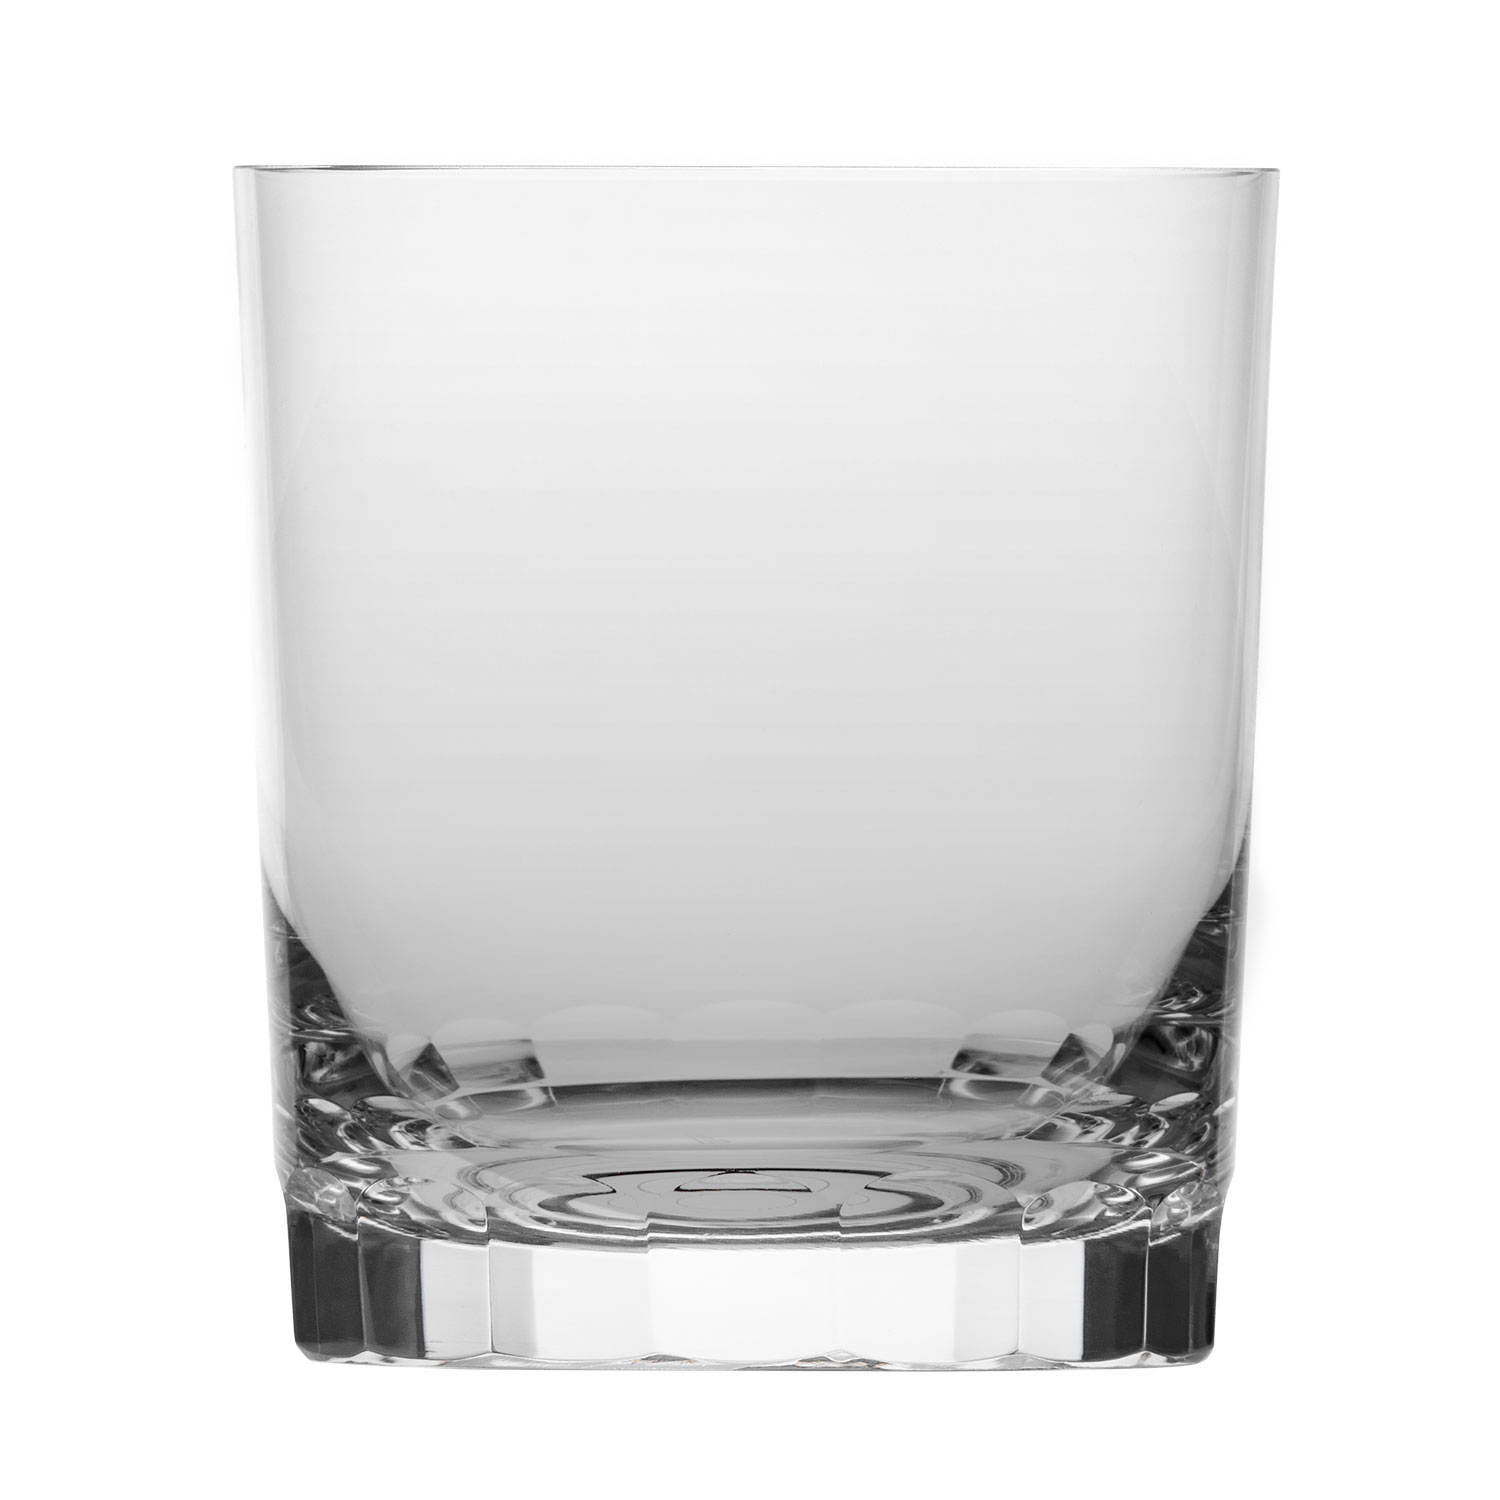 Royal sklenice na whisky, 370 ml